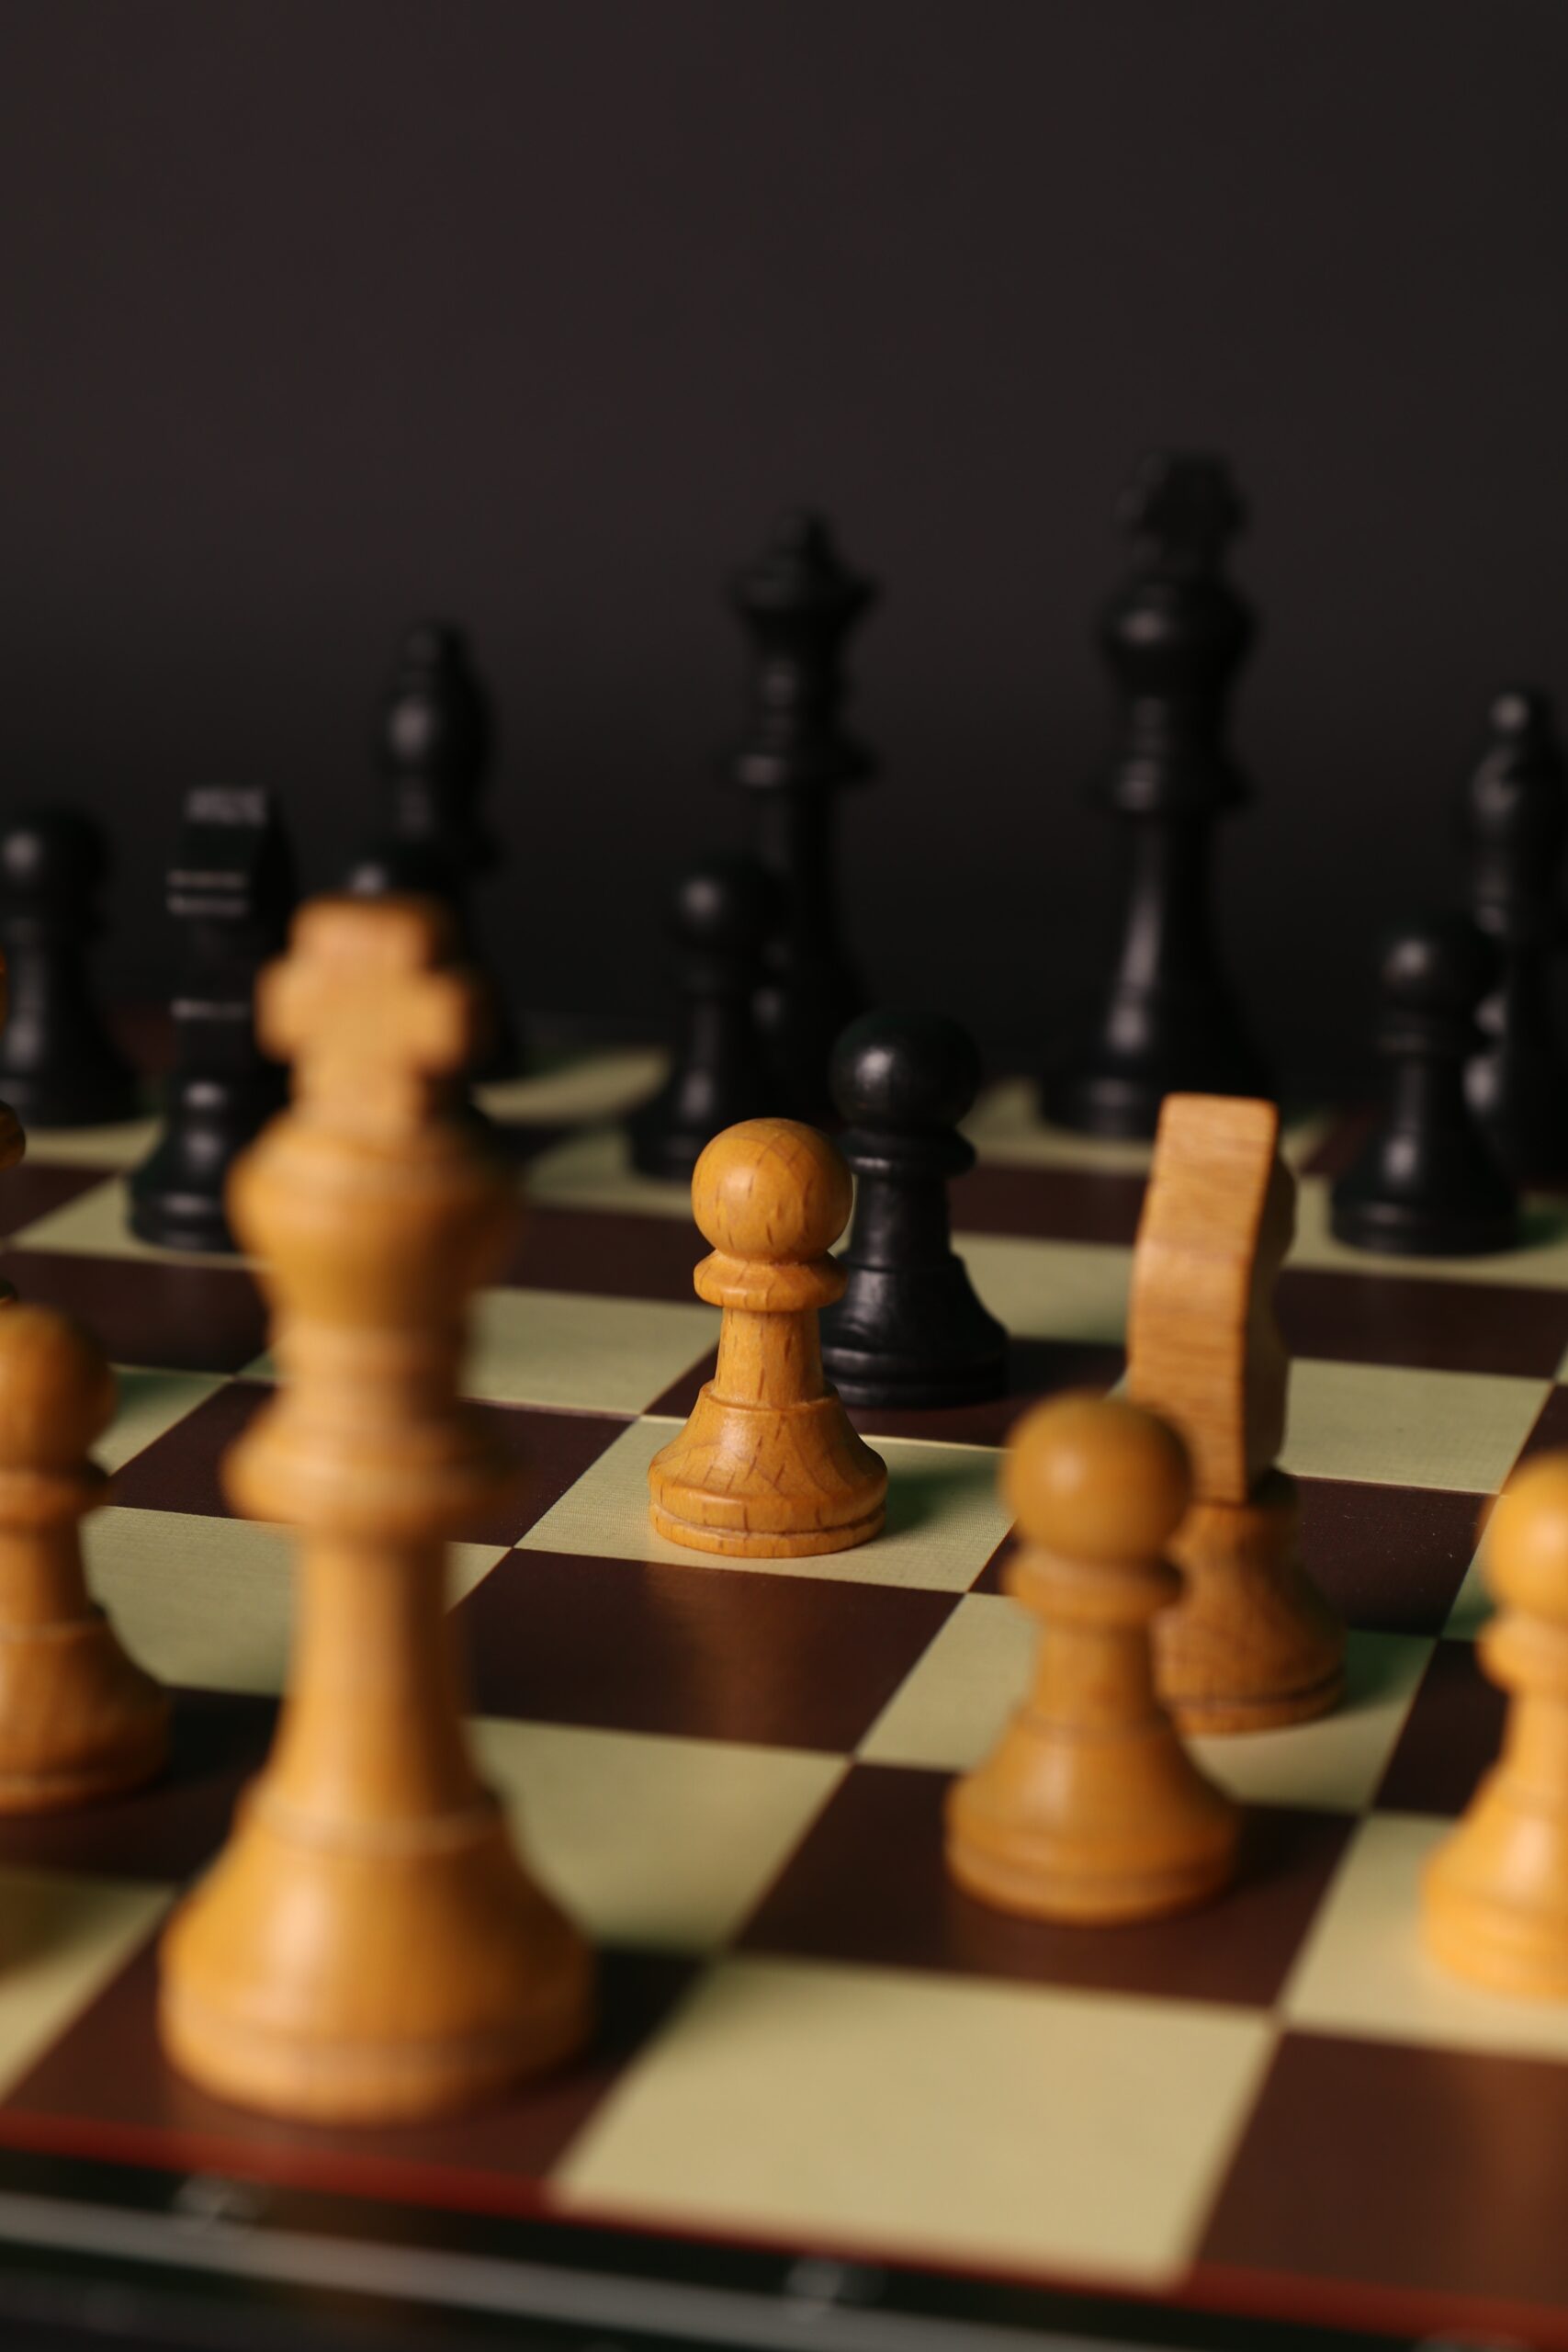 Upcoming Events ♔ ACO 2024 World Super Senior (65+) Chess